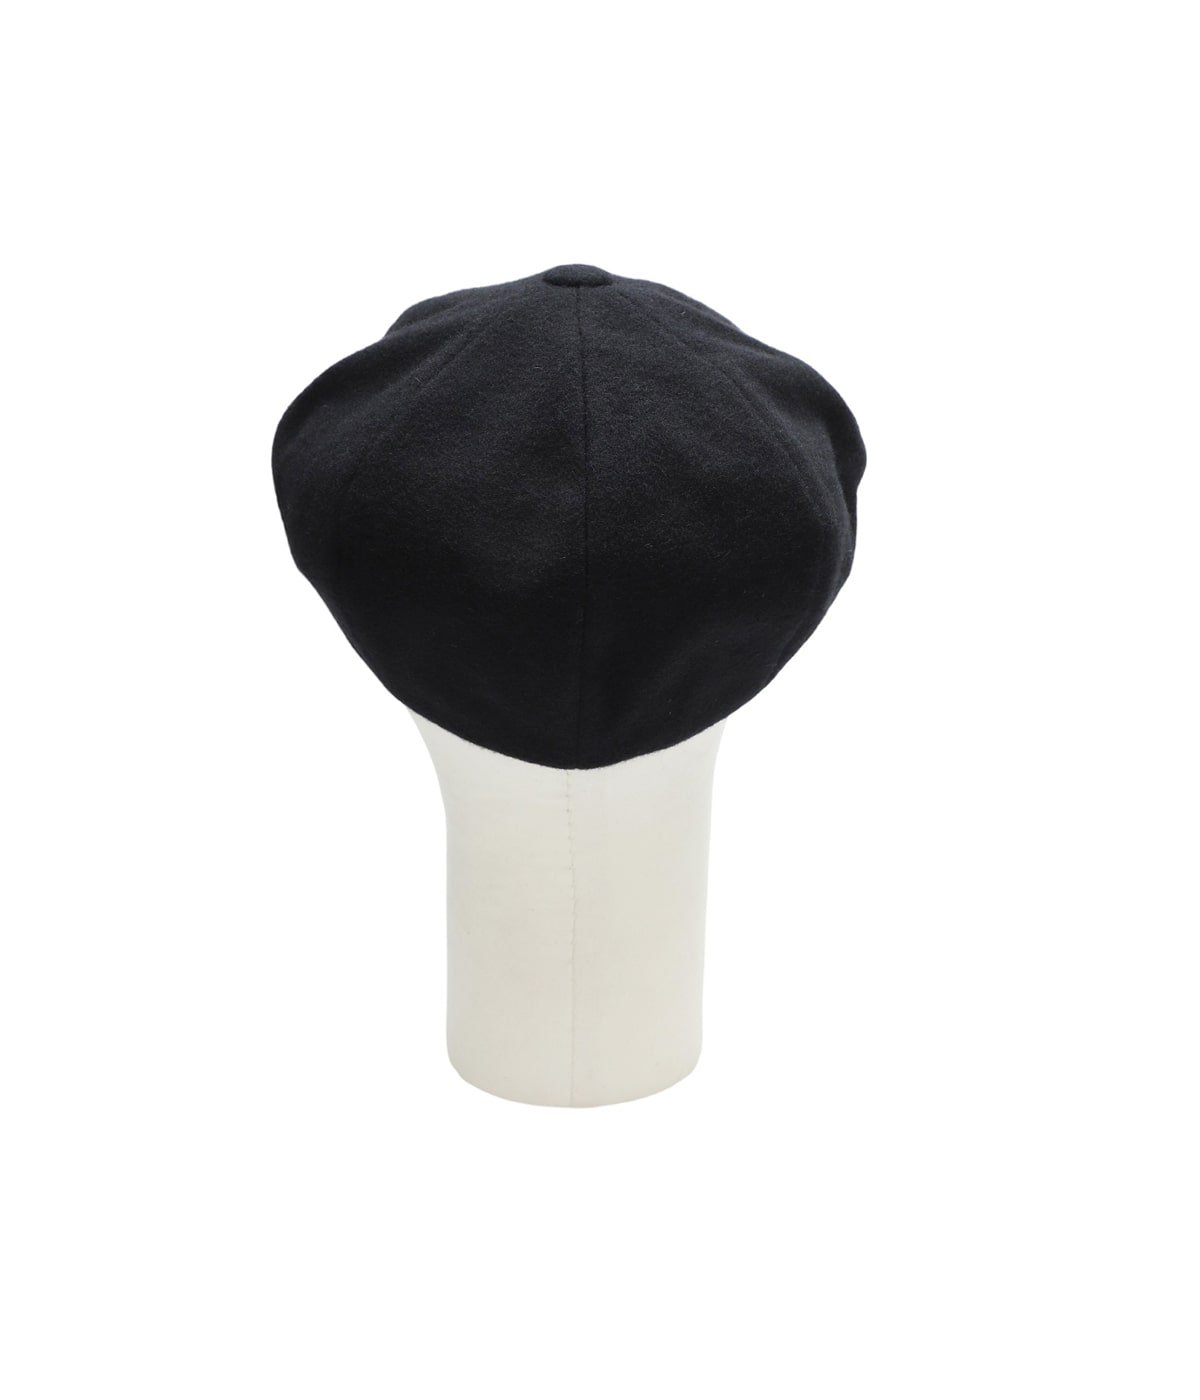 予約販売 帽子 2023 FW KIJIMA TAKAYUKI MELTON CASQUETTE 帽子 